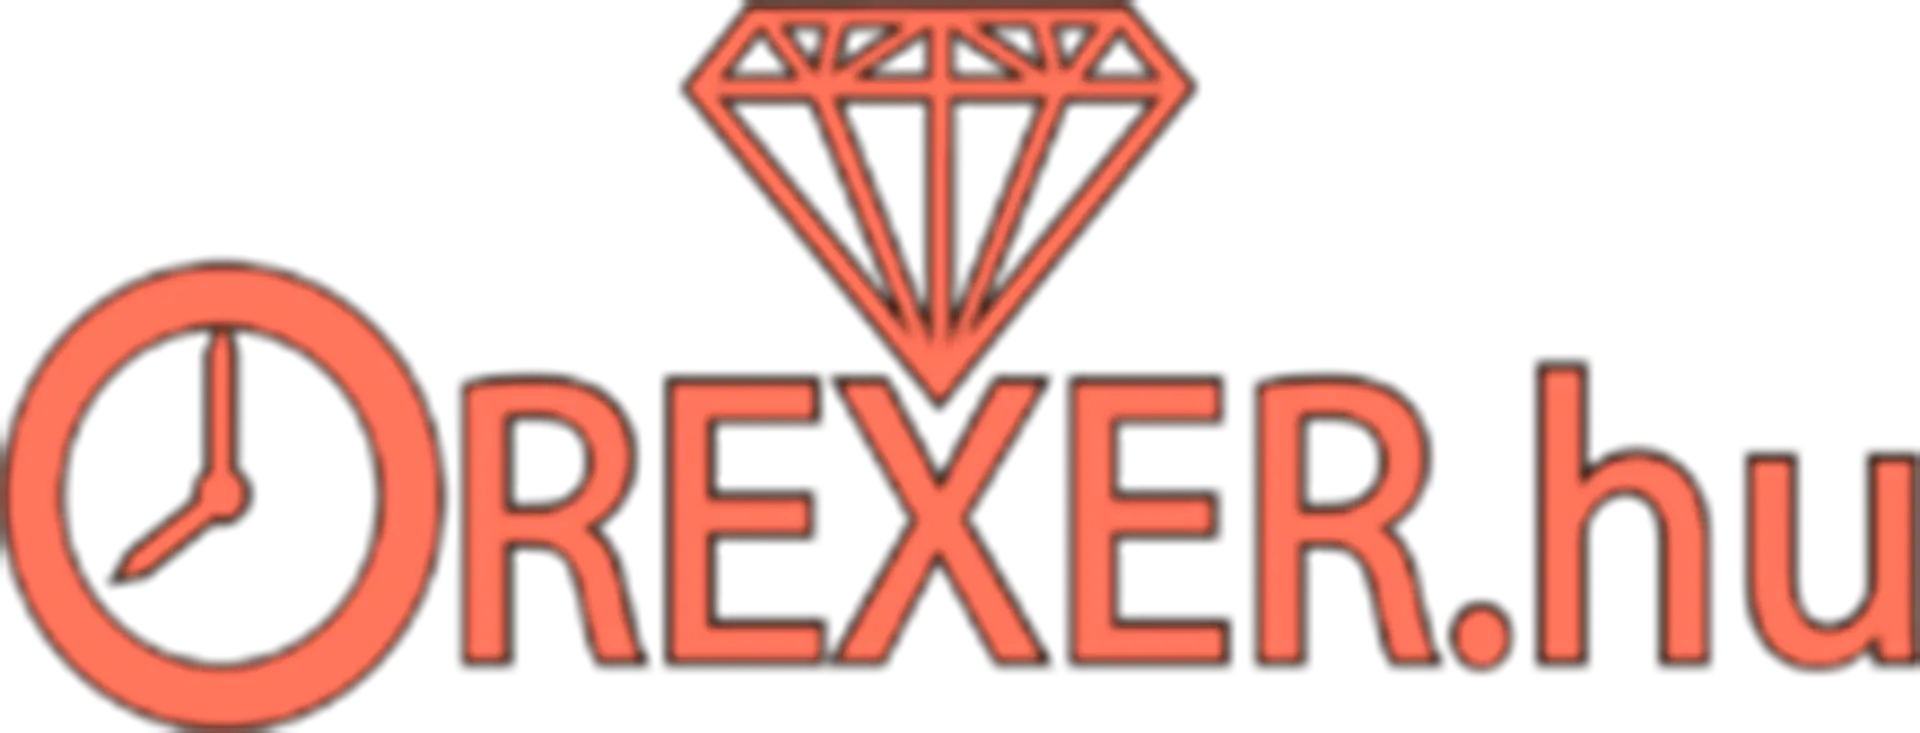 OREXER logo